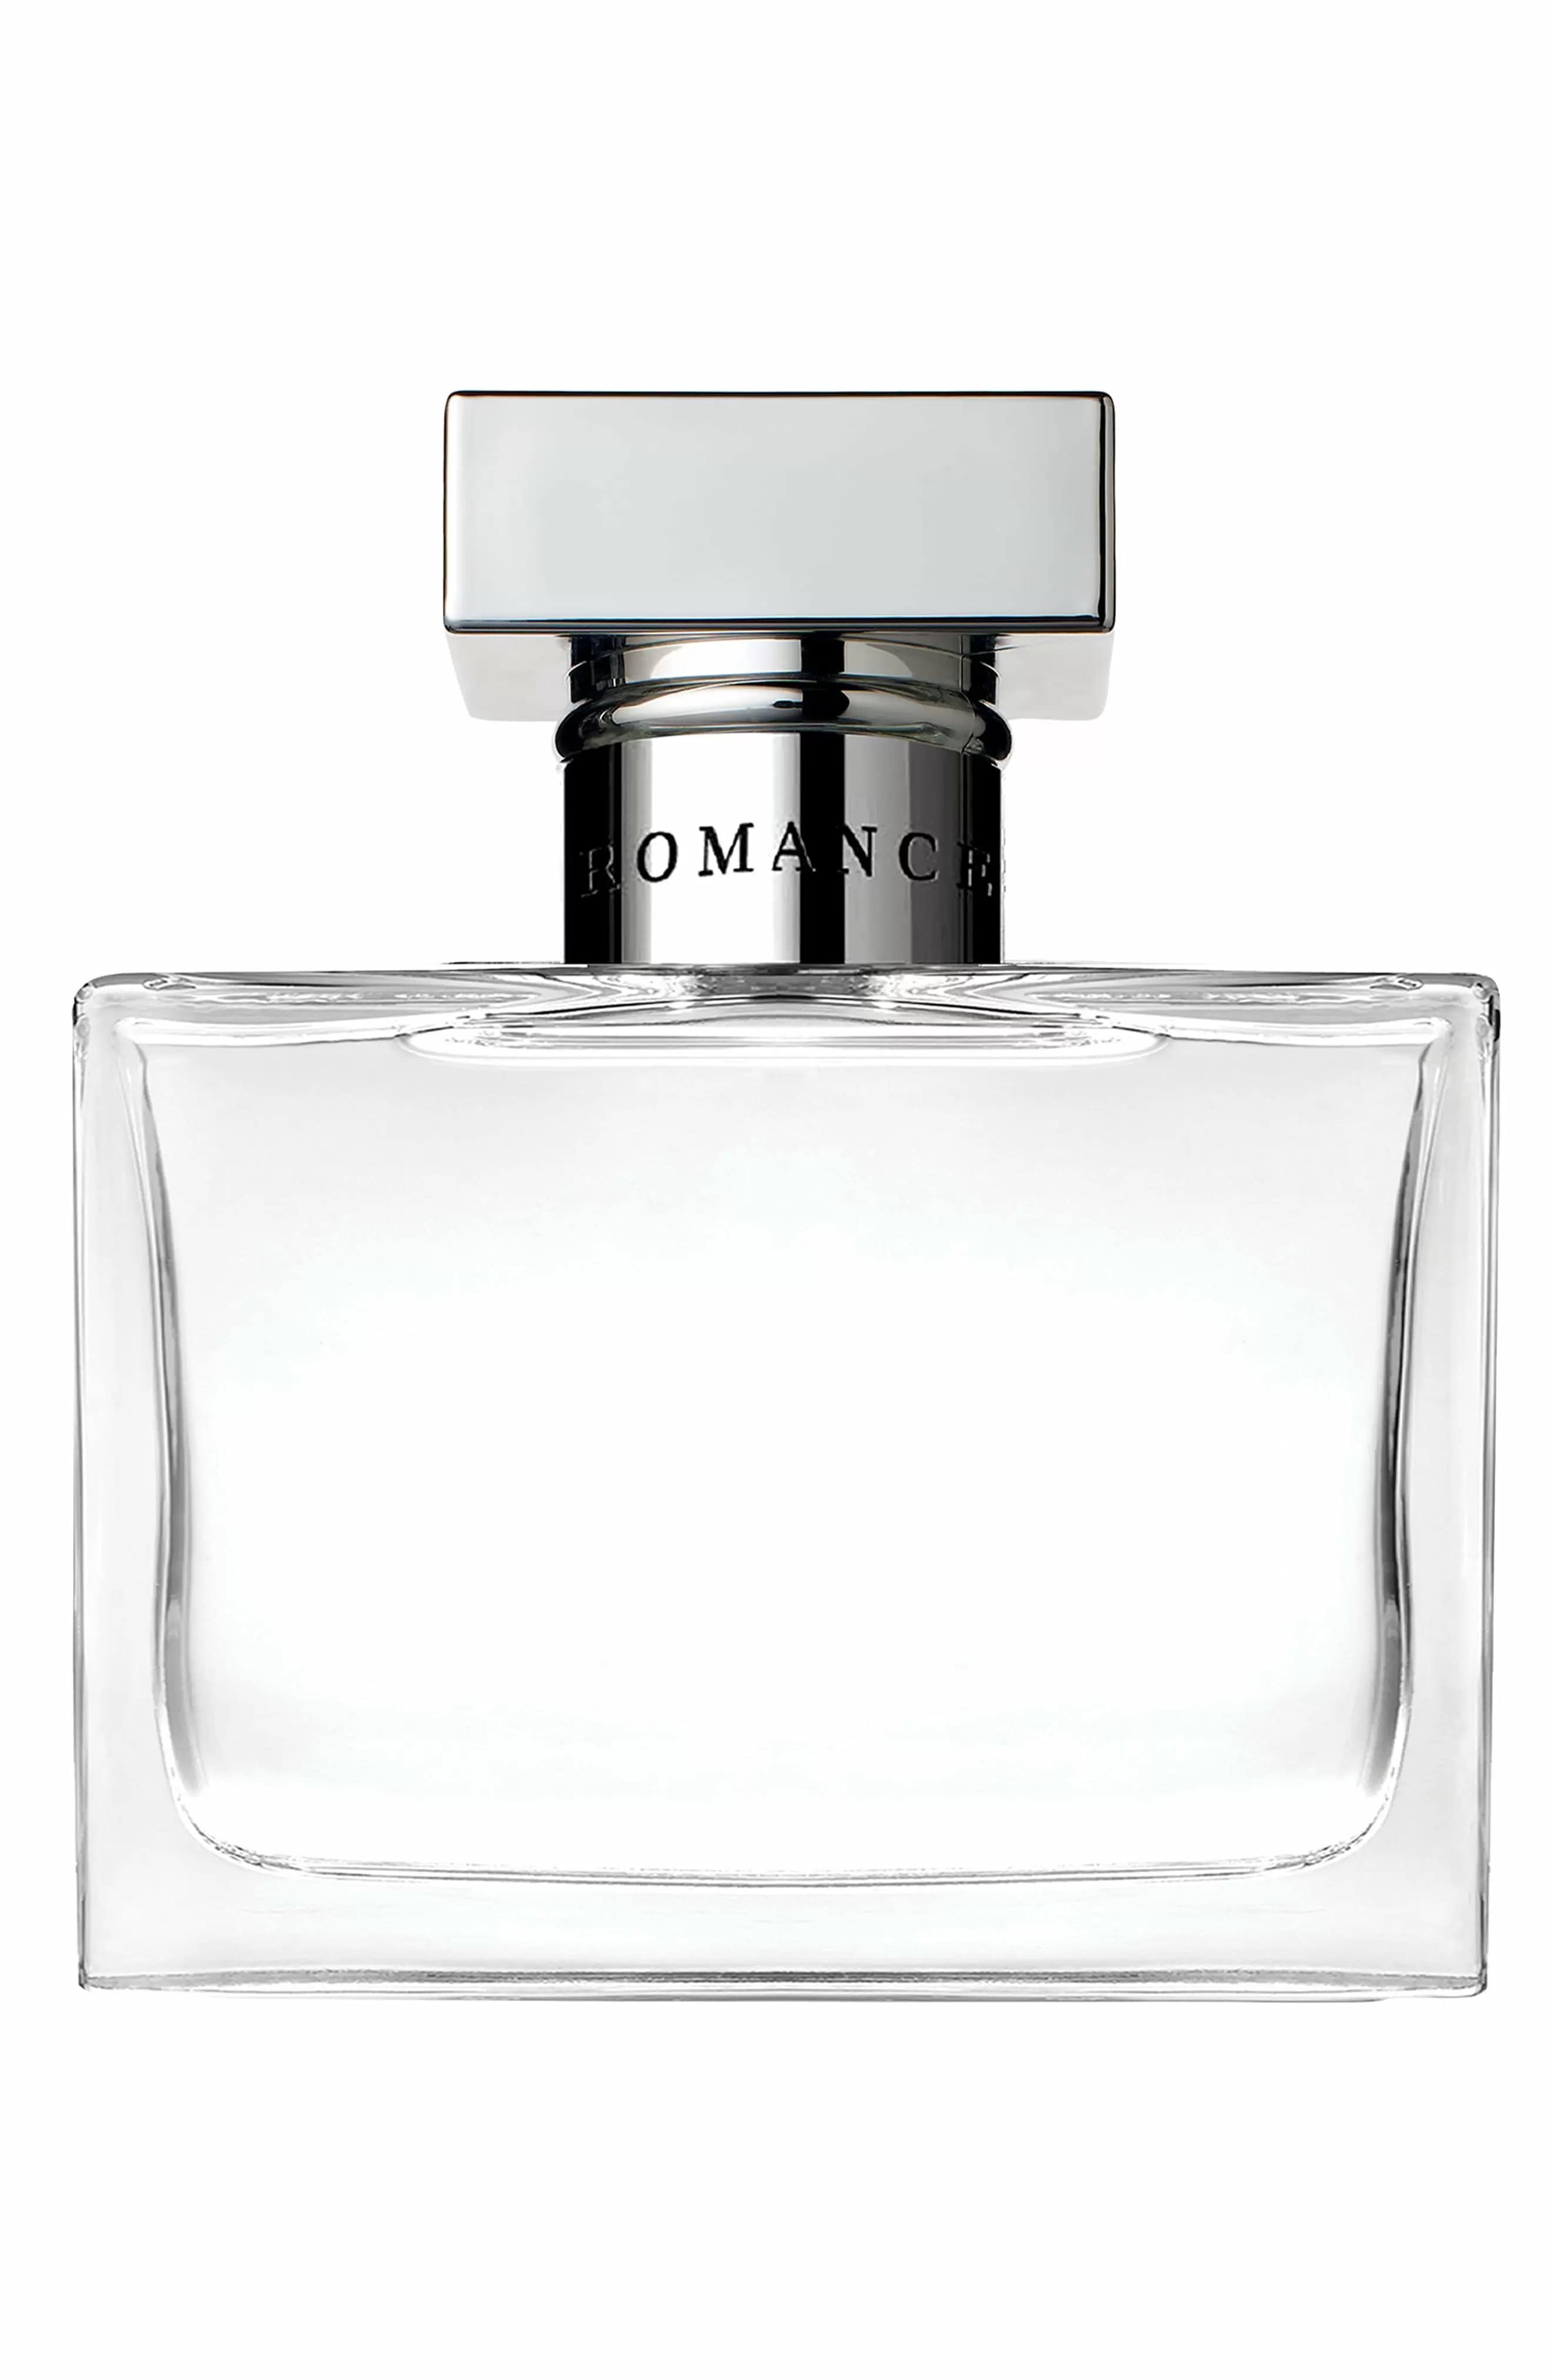 Ralph Lauren Romance EDP Spray Perfume for Women by Polo Ralph Lauren